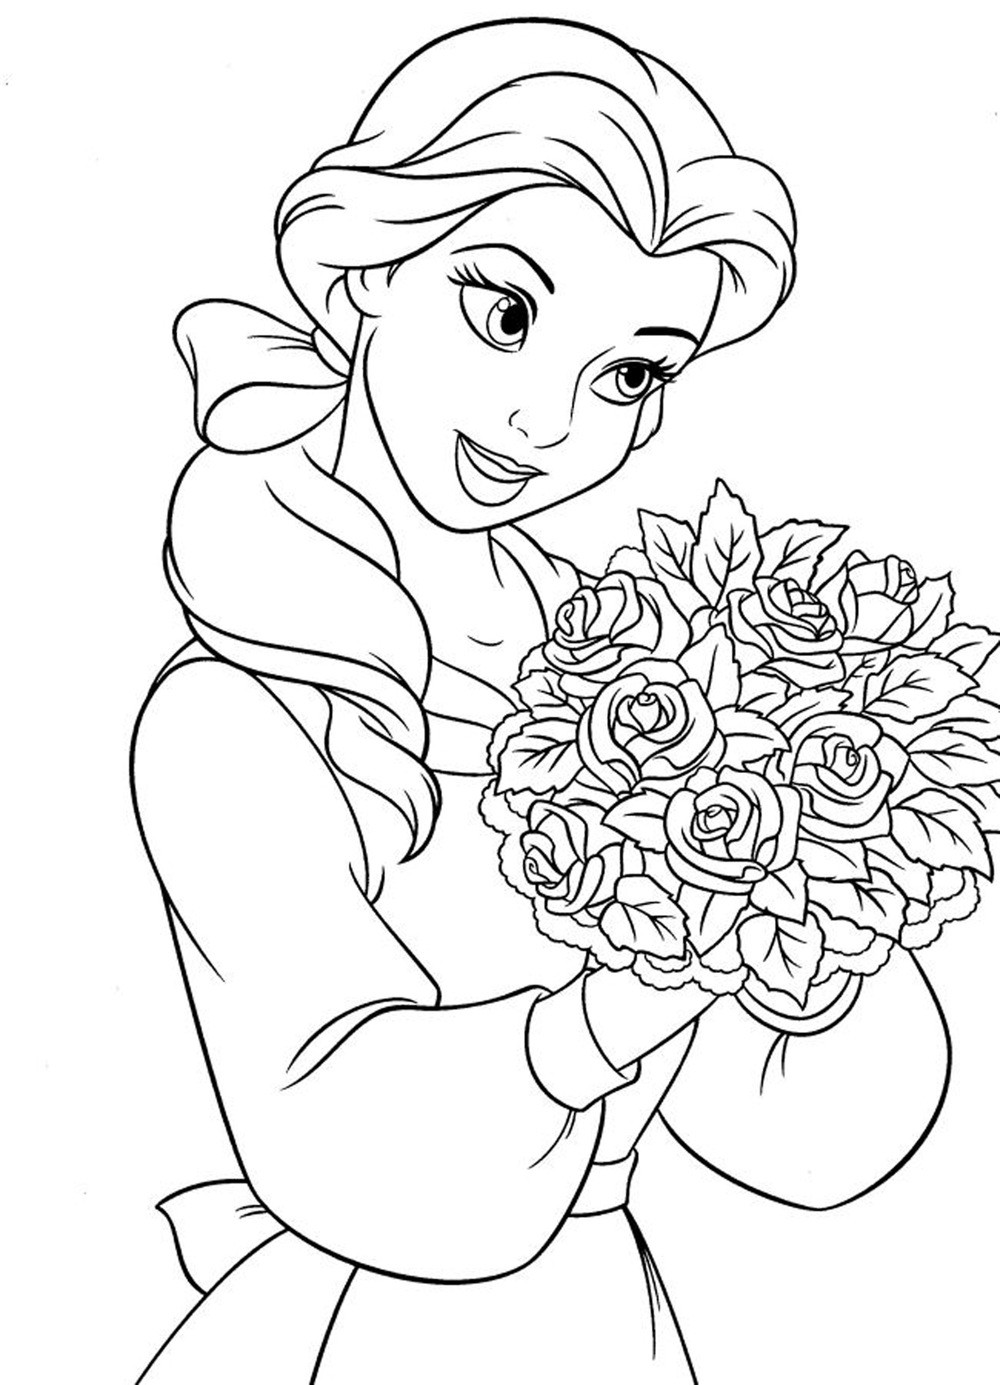 Free Printable Disney Princess Coloring Pages
 Disney Princess Tiana Coloring Page Disney